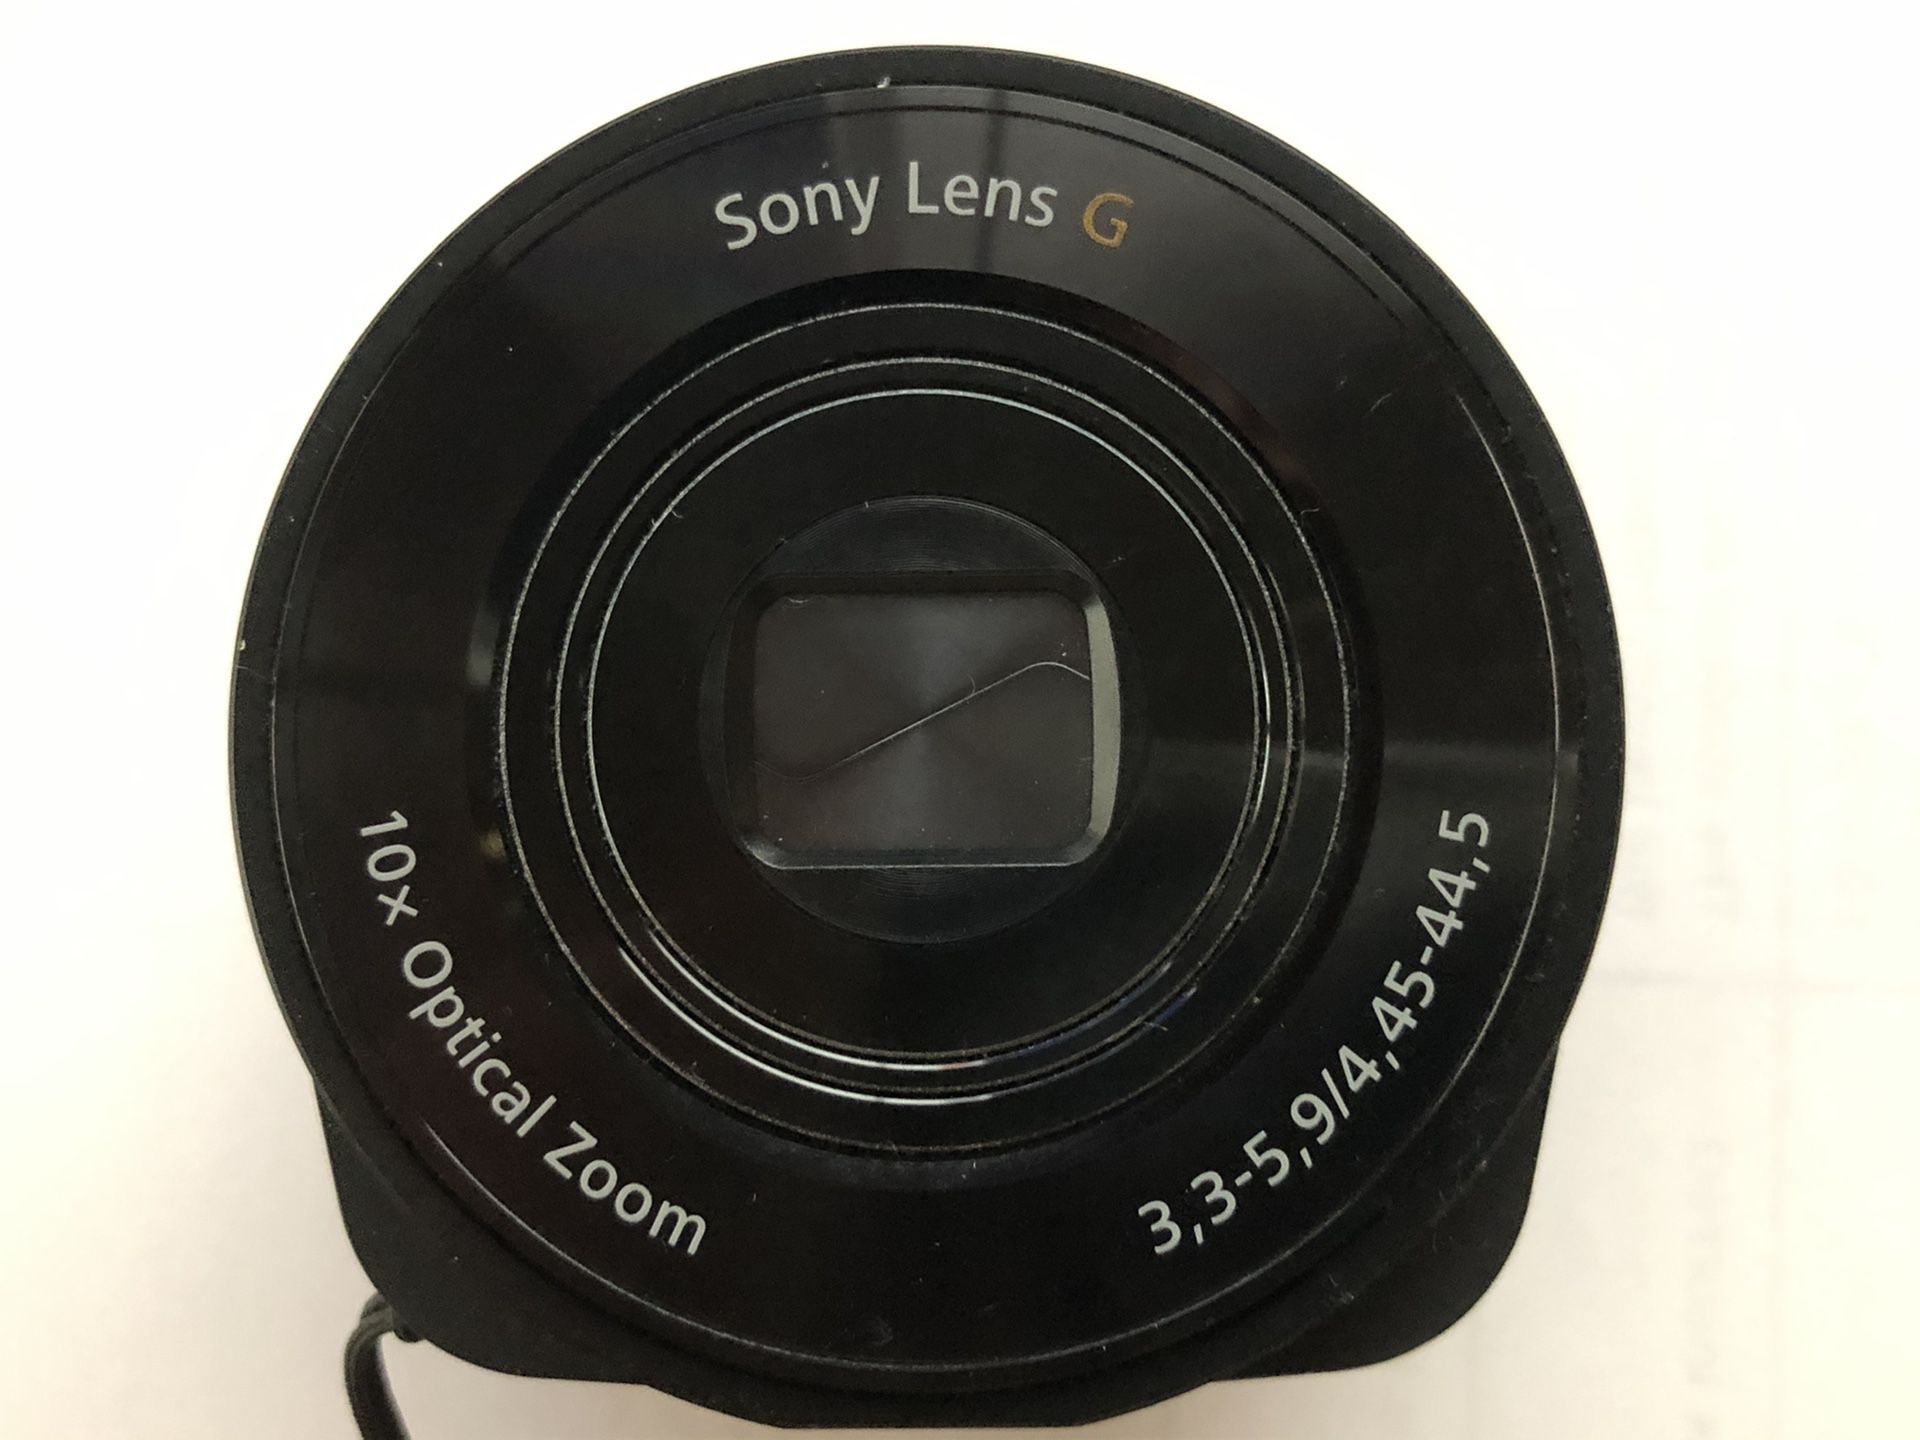 Sony cyber-shot dsc-qx10 digital camera